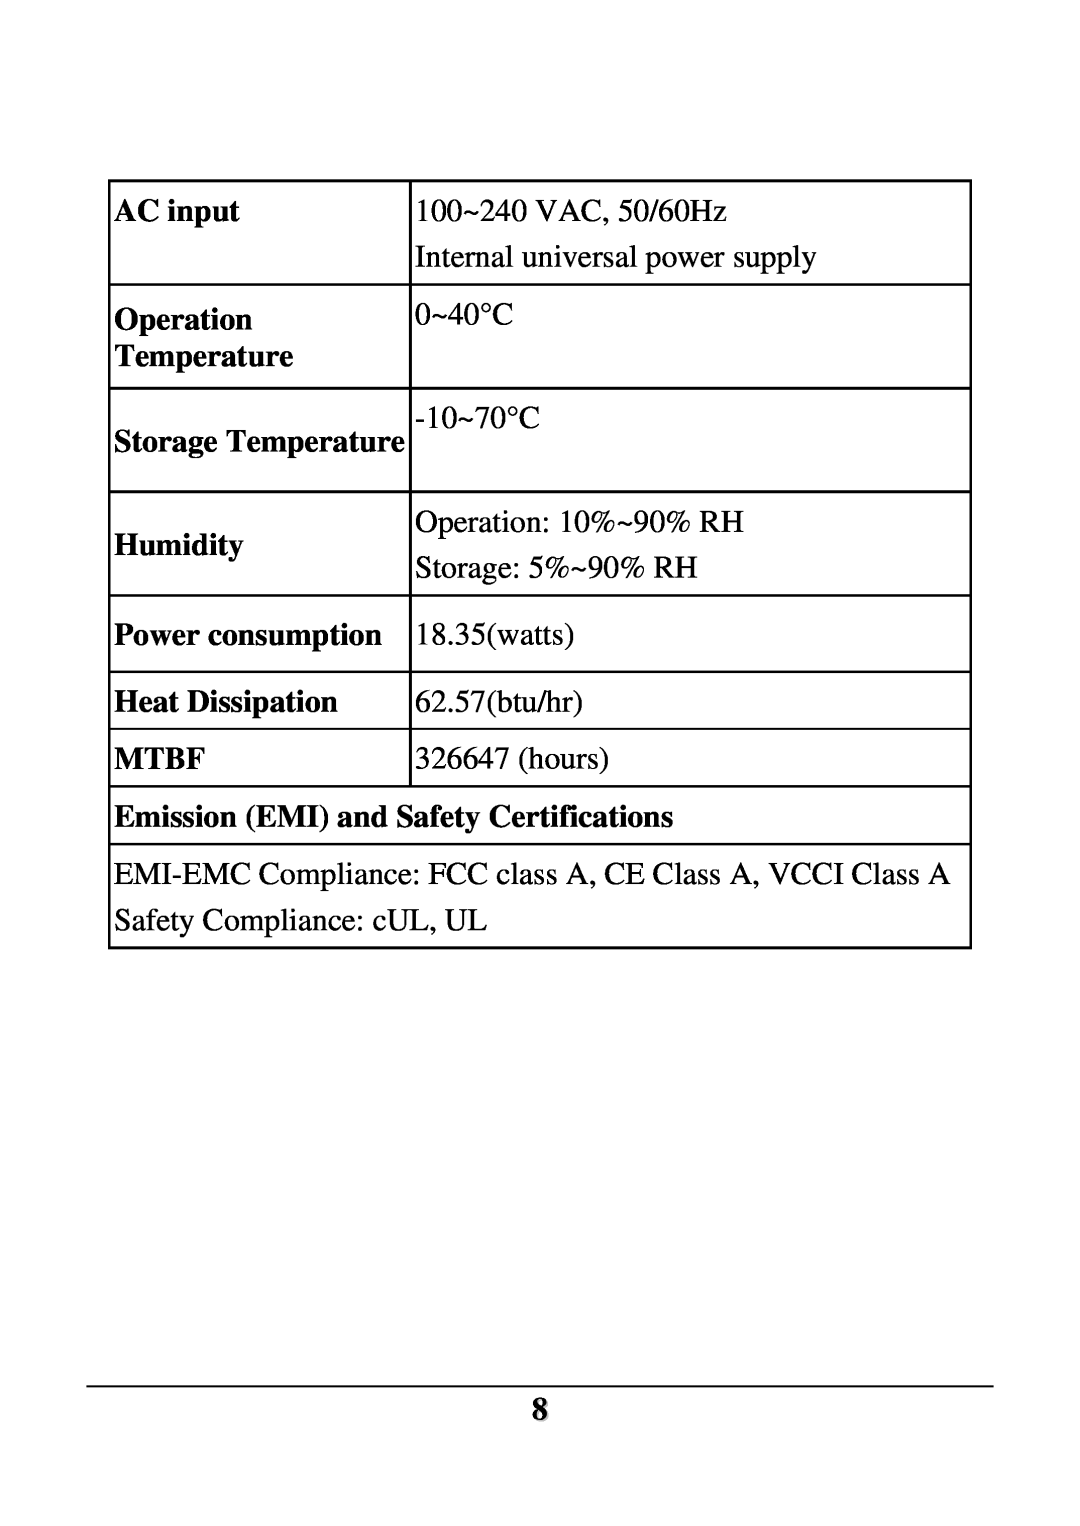 D-Link DES-1228 AC input, Operation, Storage Temperature, Humidity, Power consumption, Heat Dissipation, Mtbf 